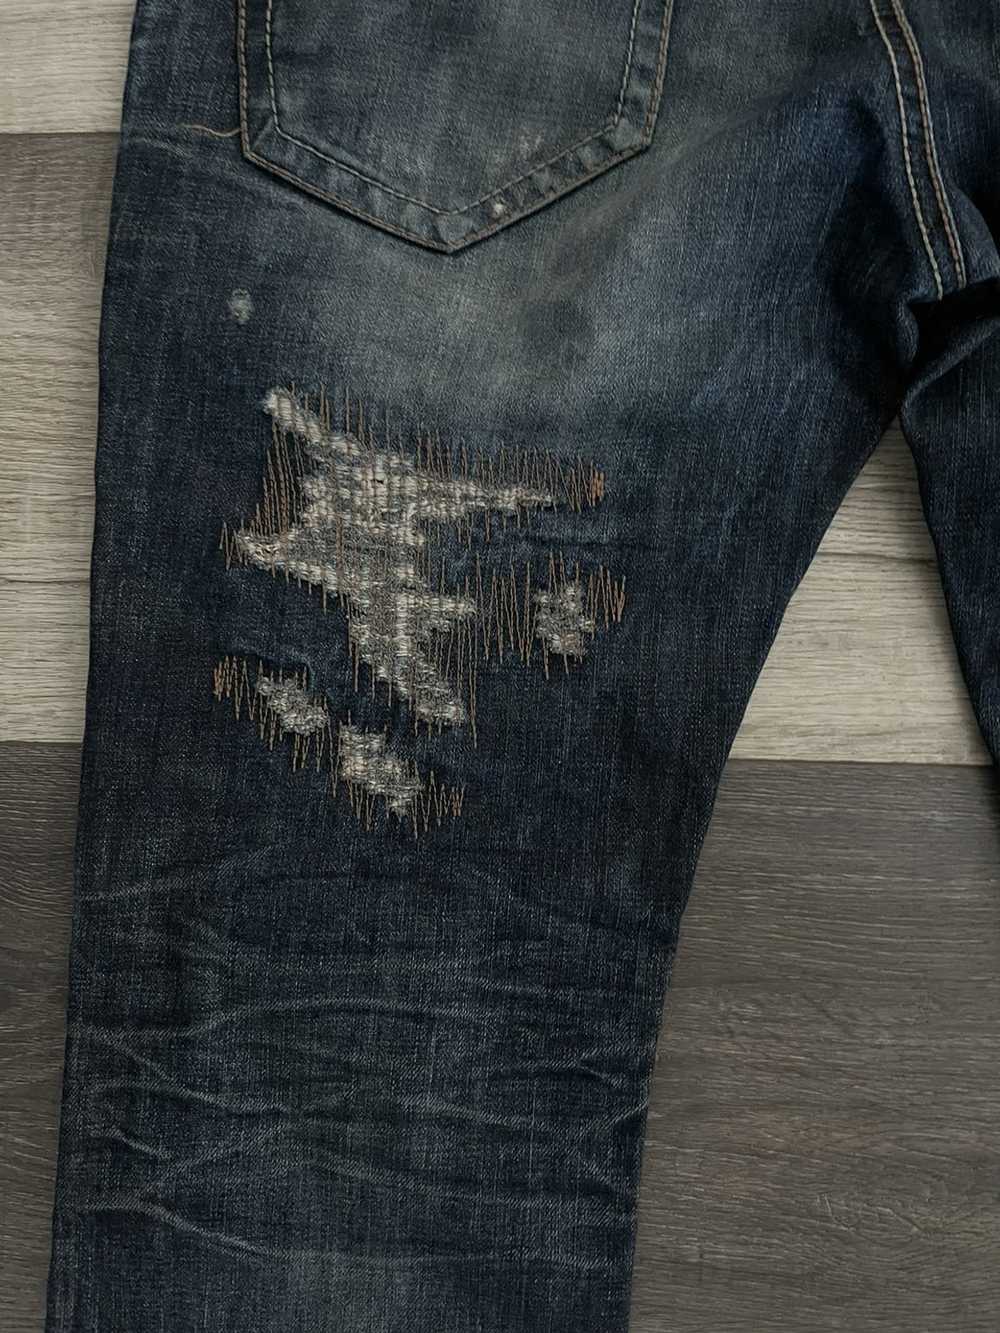 PPFM Buckaroo indigo jeans - image 5